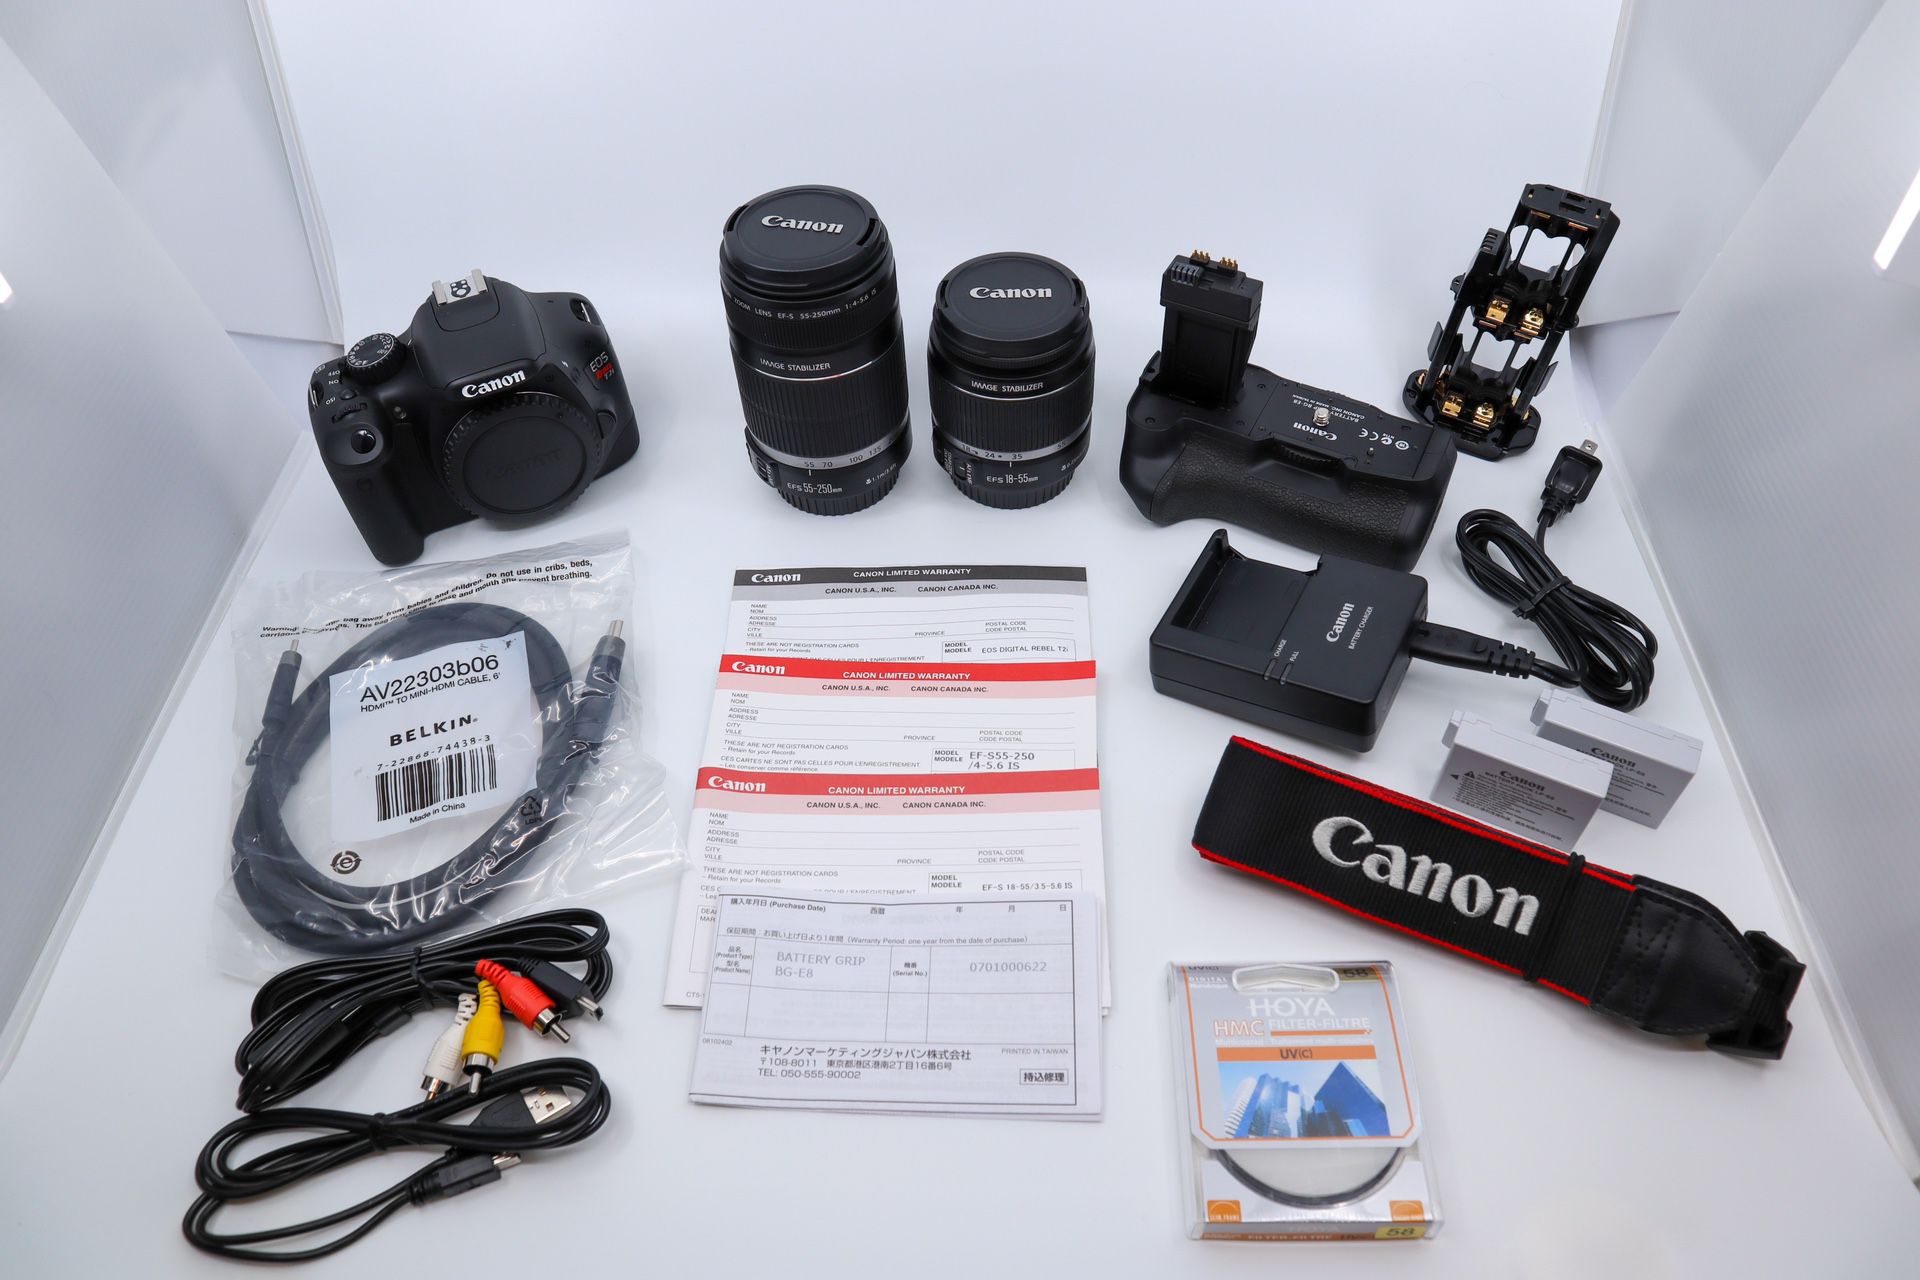 Canon EOS Rebel T2i 550D DSLR Camera, Battery Grip, 18-55mm, 55-250mm Lens, Case